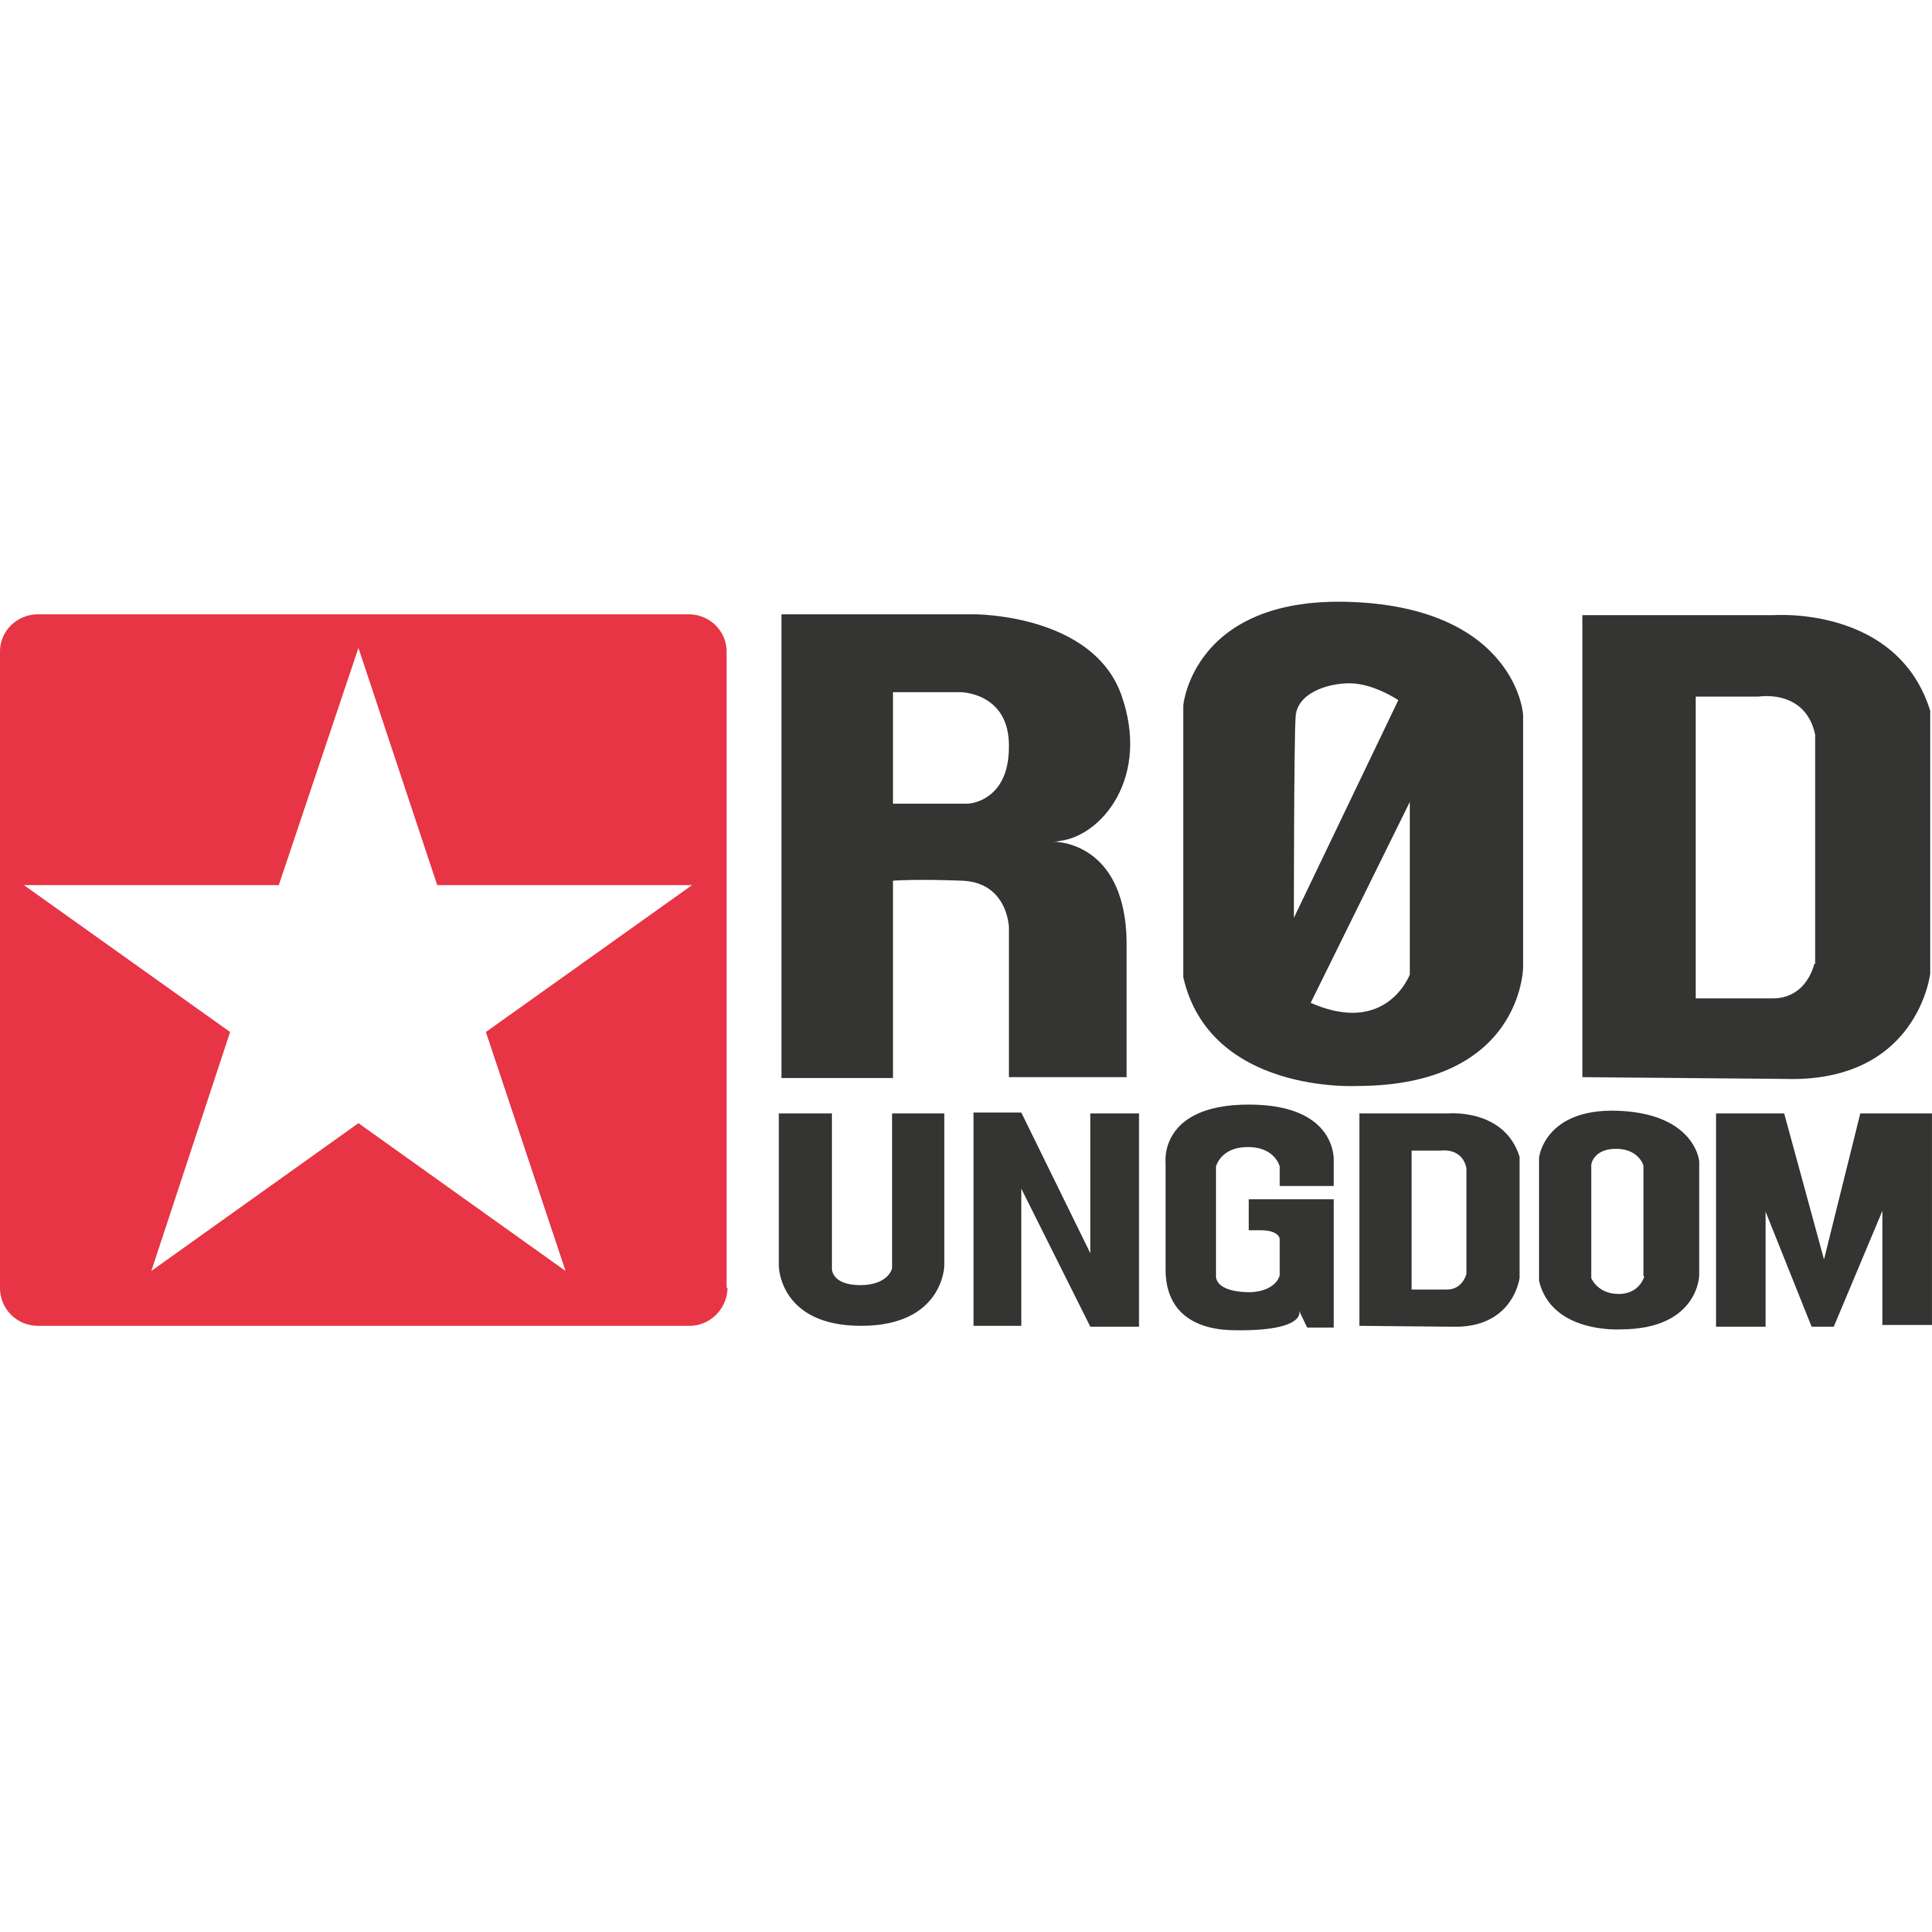 Rod Ungdom Logo  Transparent Image